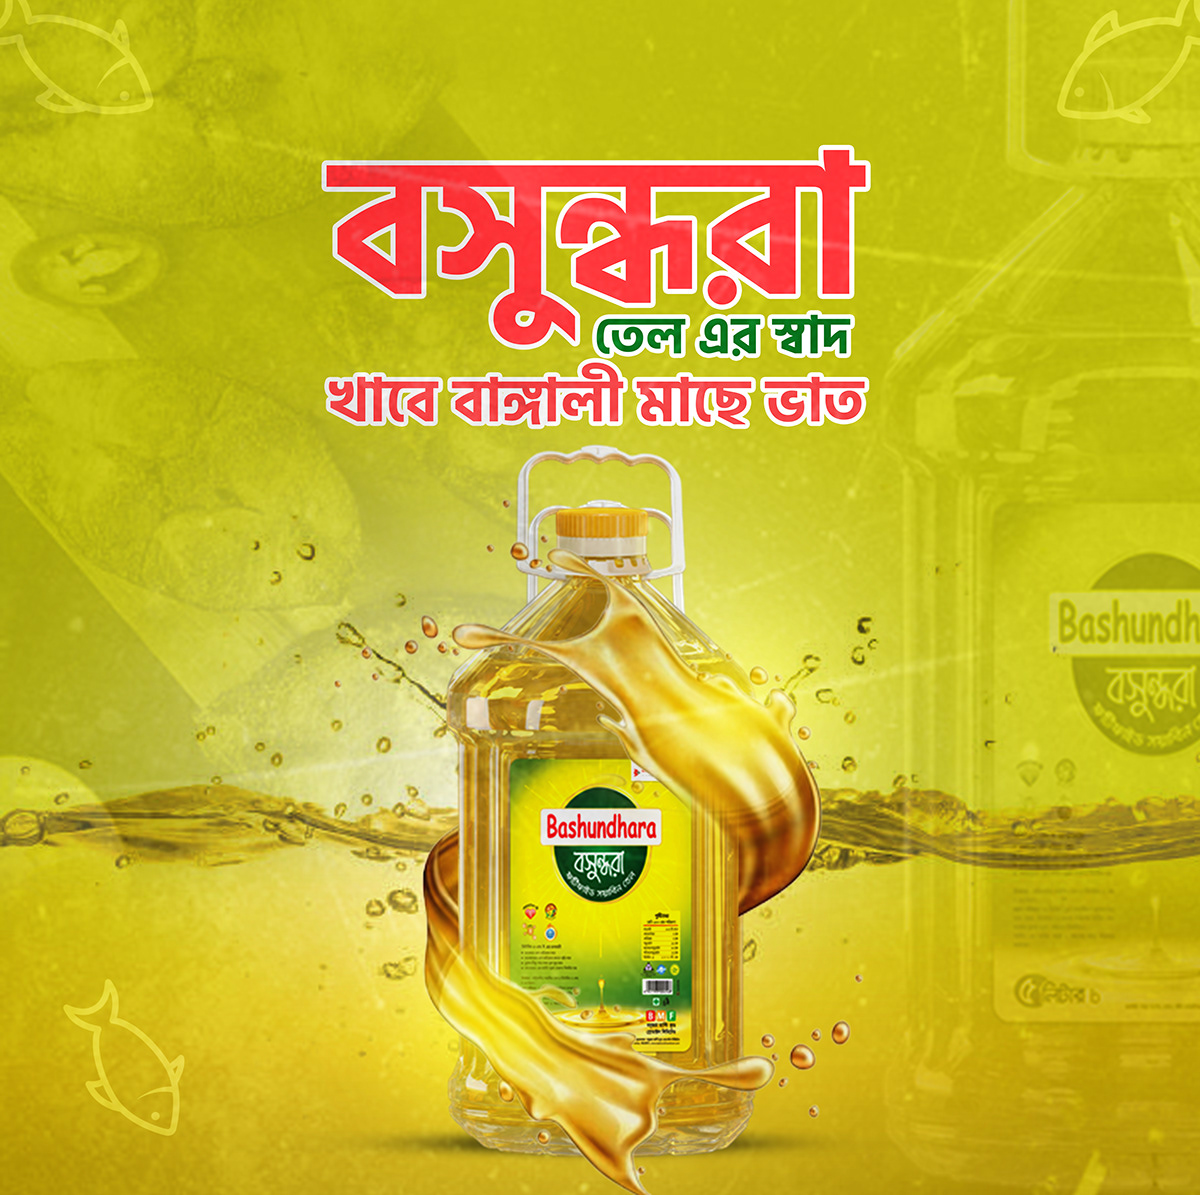 Social media post Socialmedia teabranding Grocery brand identity social media Sweets groceryads oil